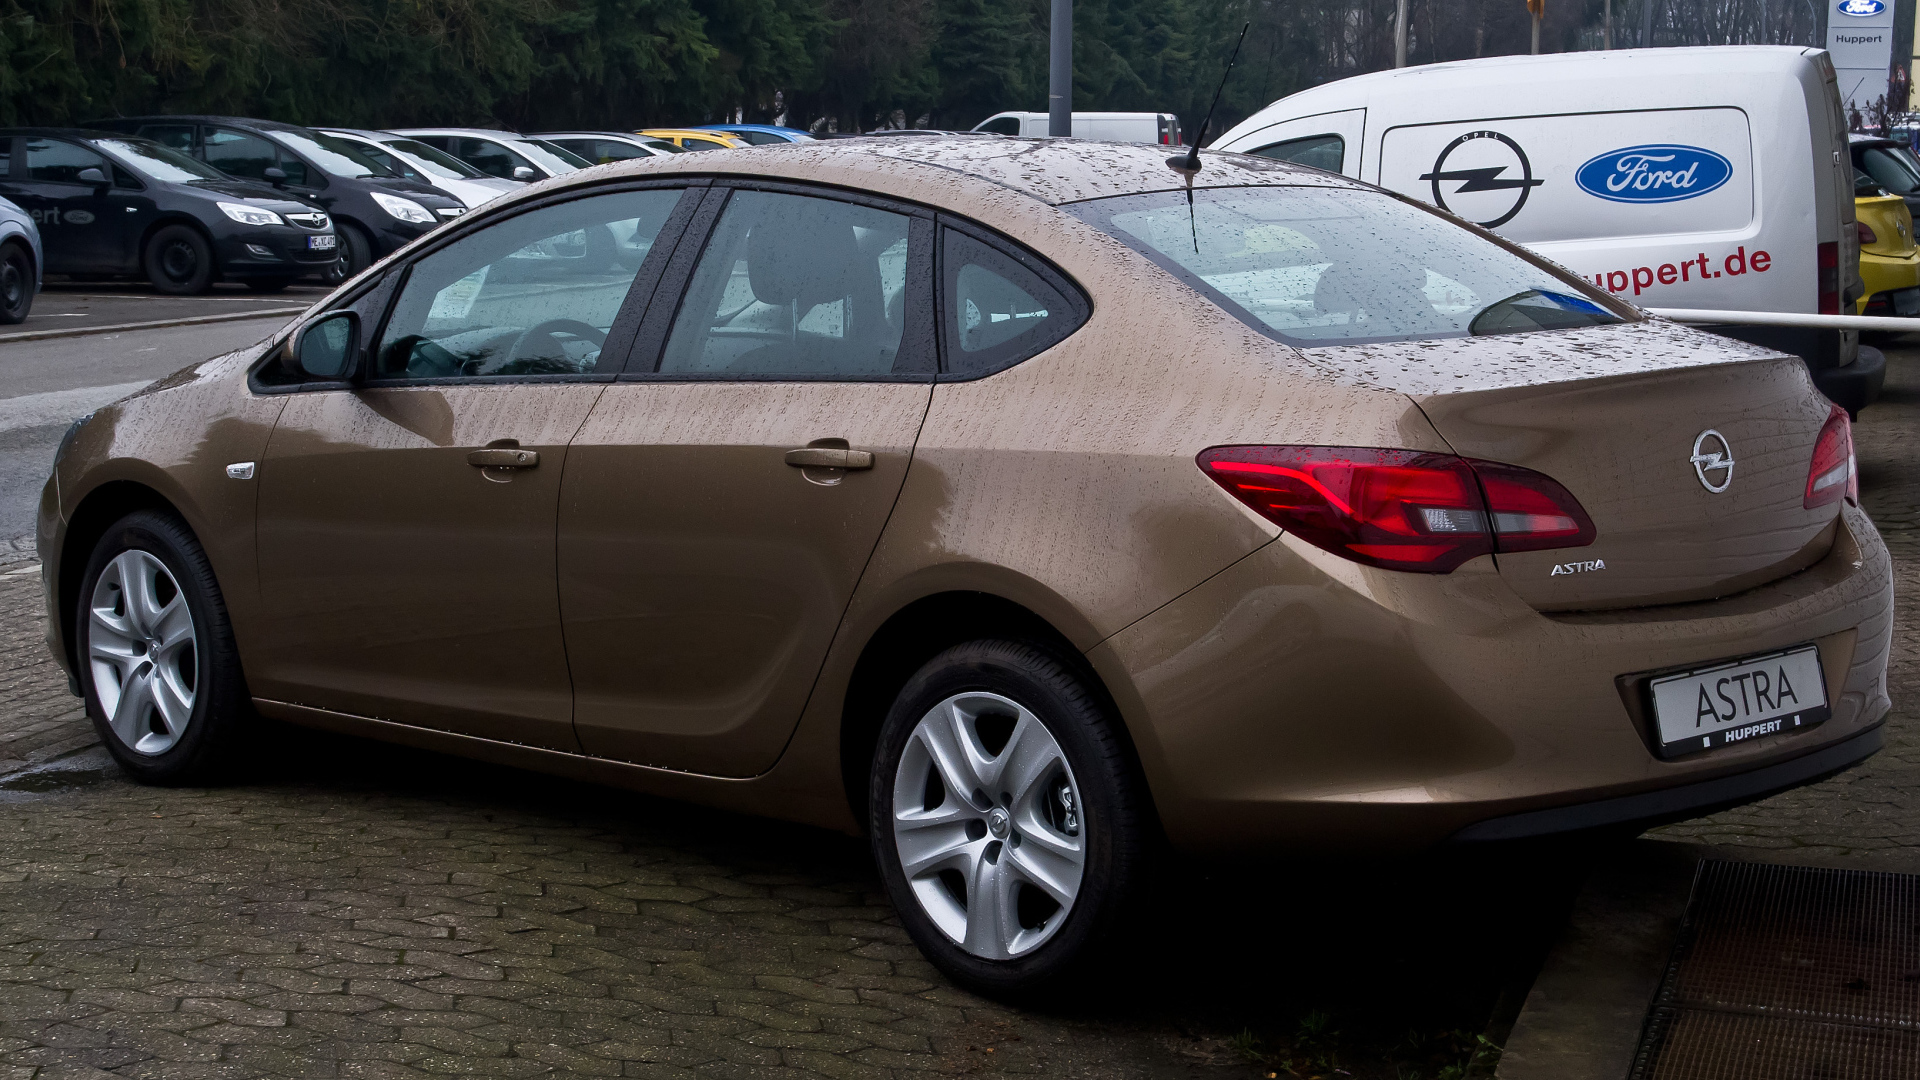 Новая машина Opel Astra